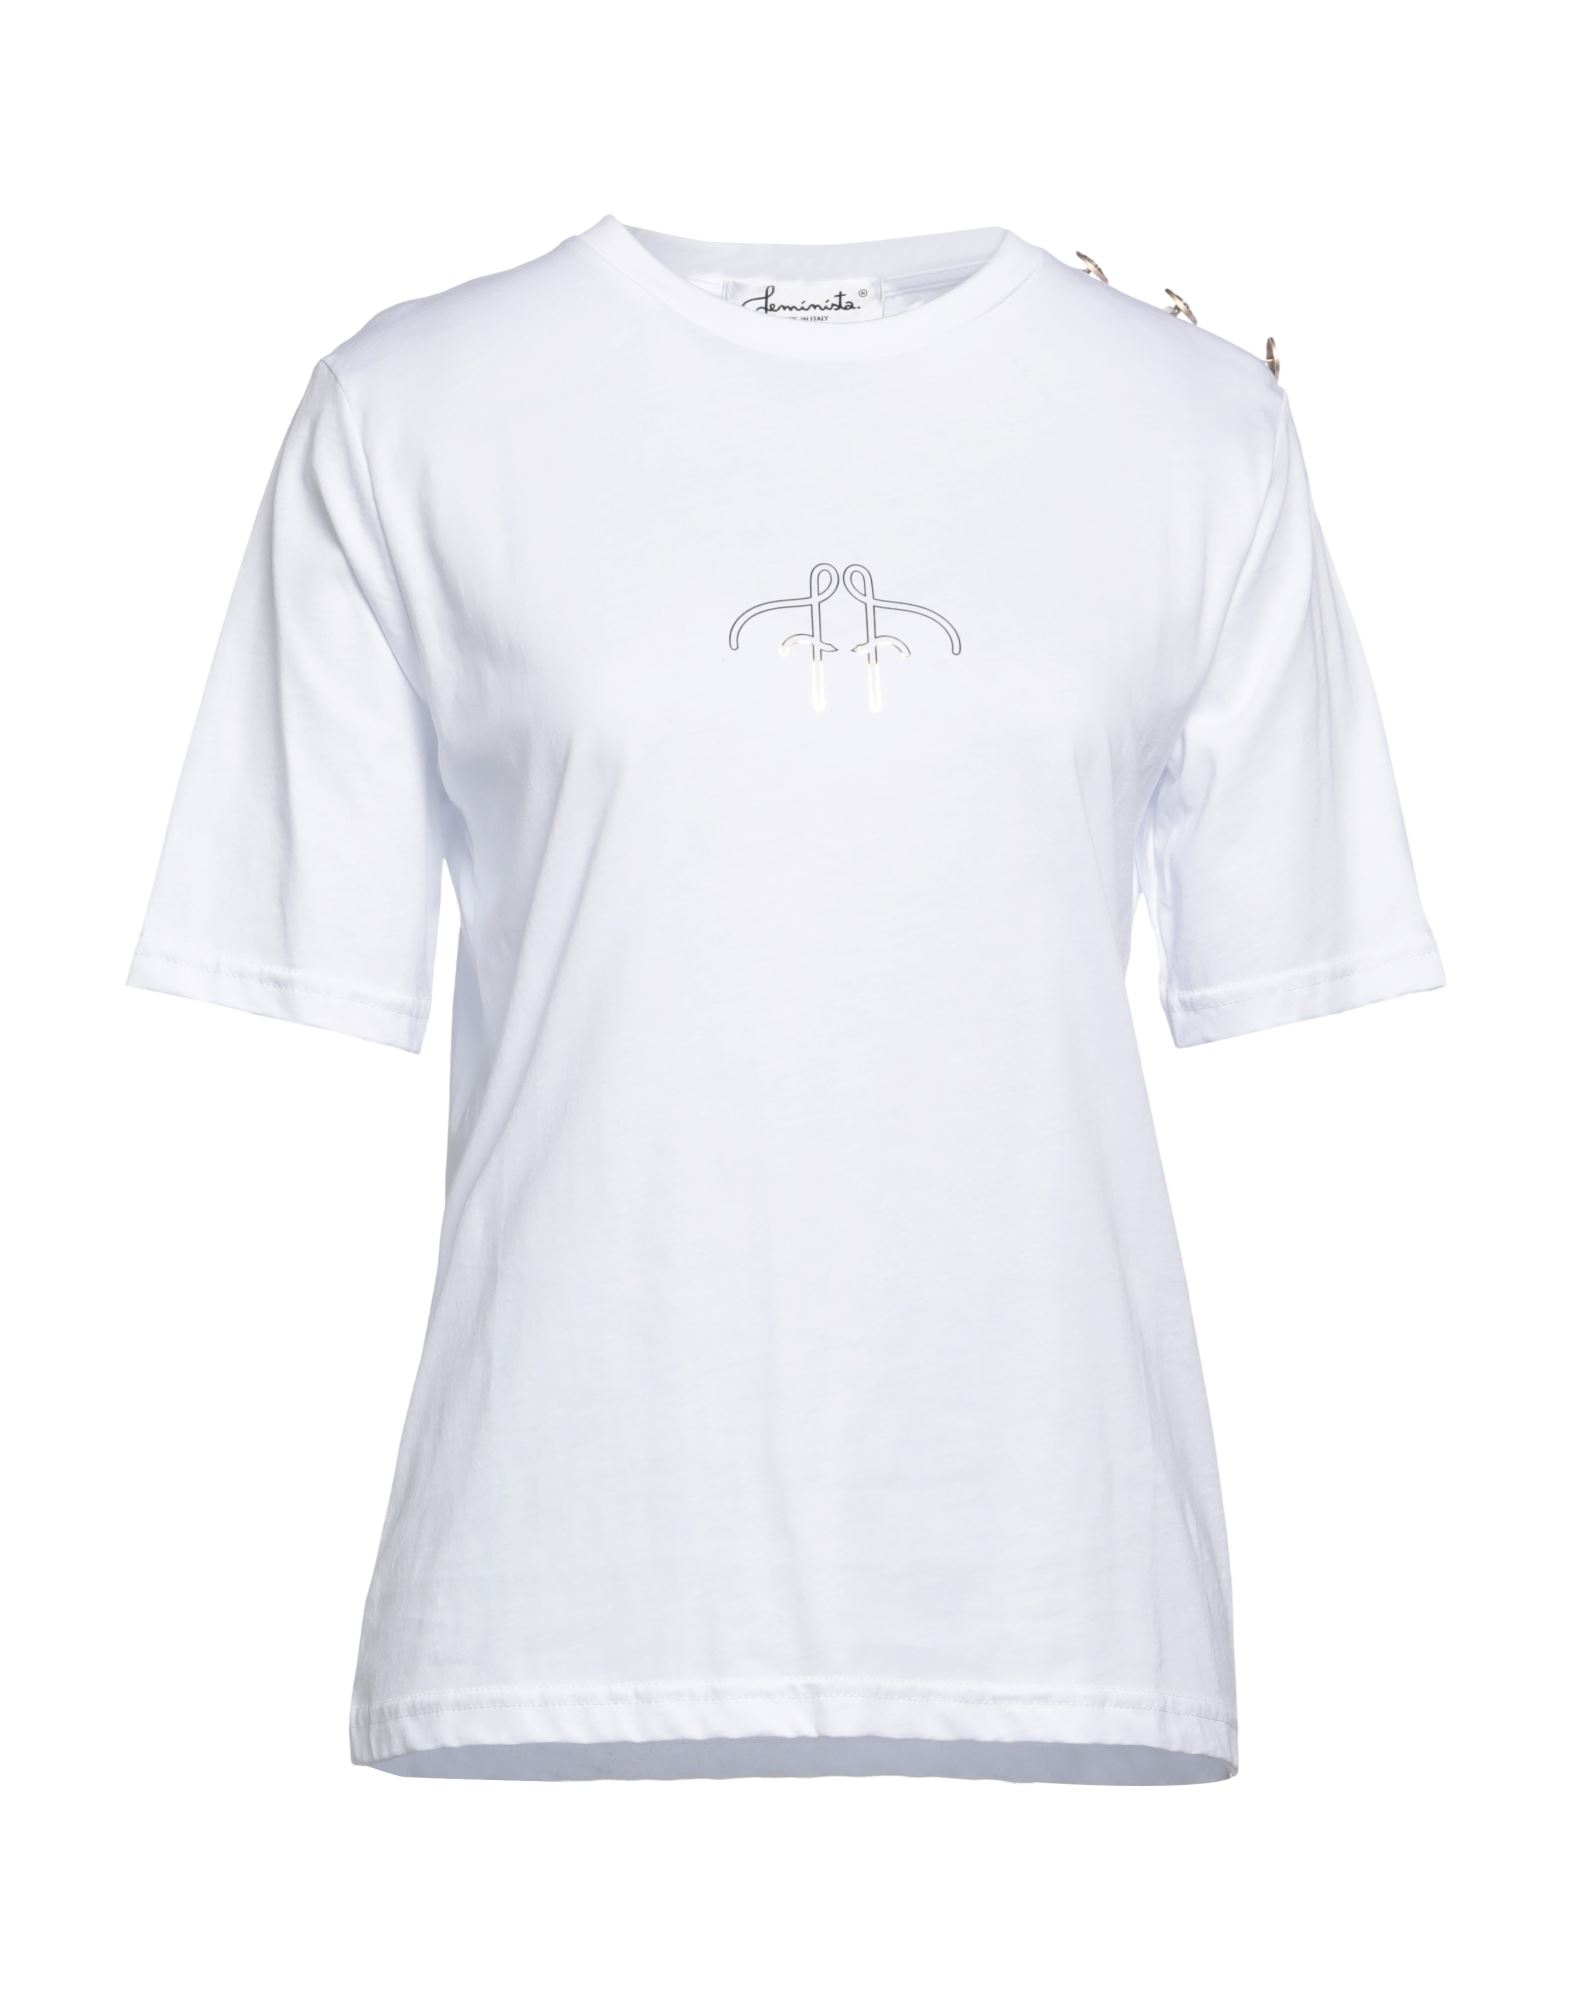 Feminista T-shirts In White